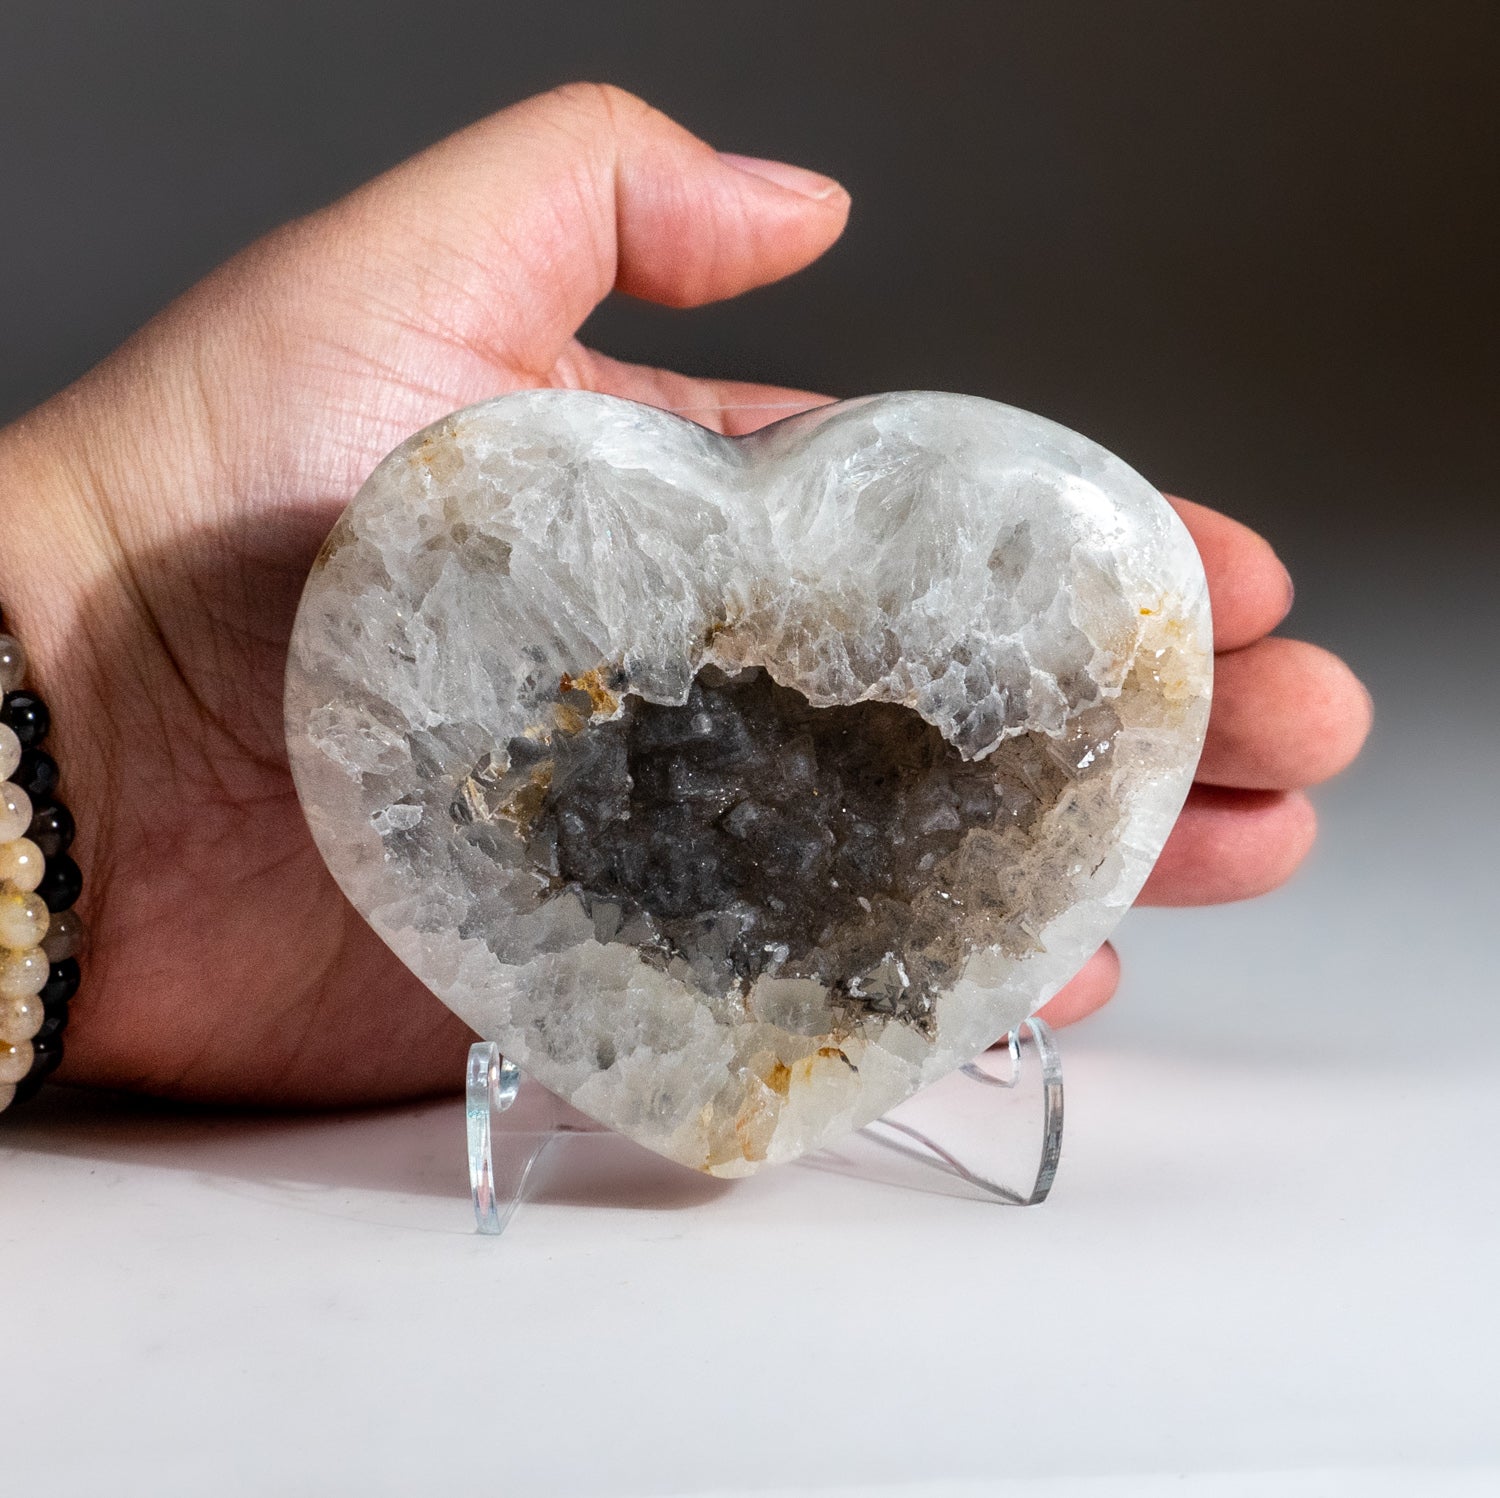 Genuine Banded Agate Quartz Geode Heart from Uruguay (337.9 grams)